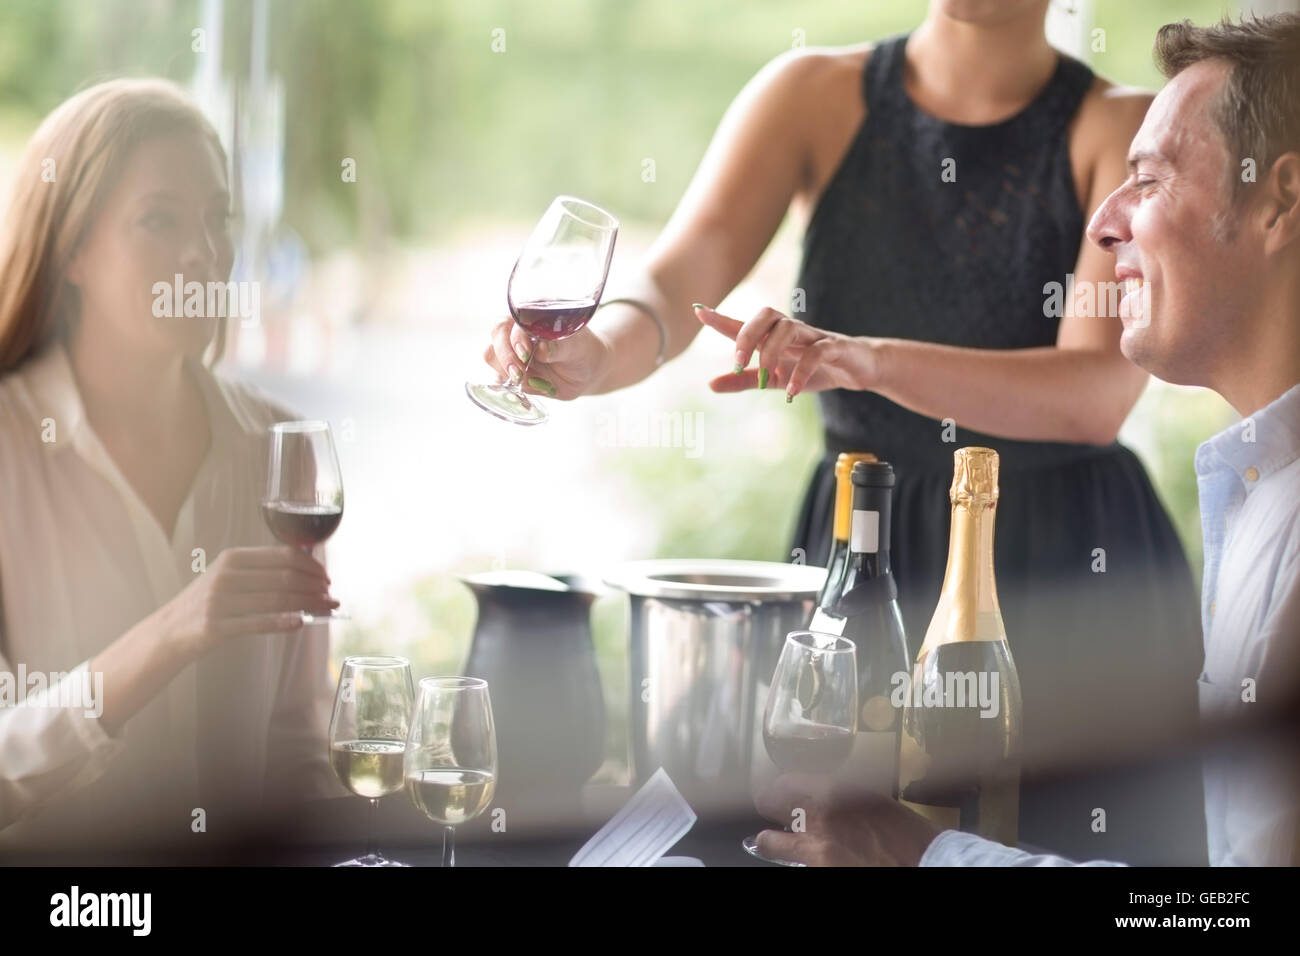 Waitress in restaurant presenting red wine Stock Photo